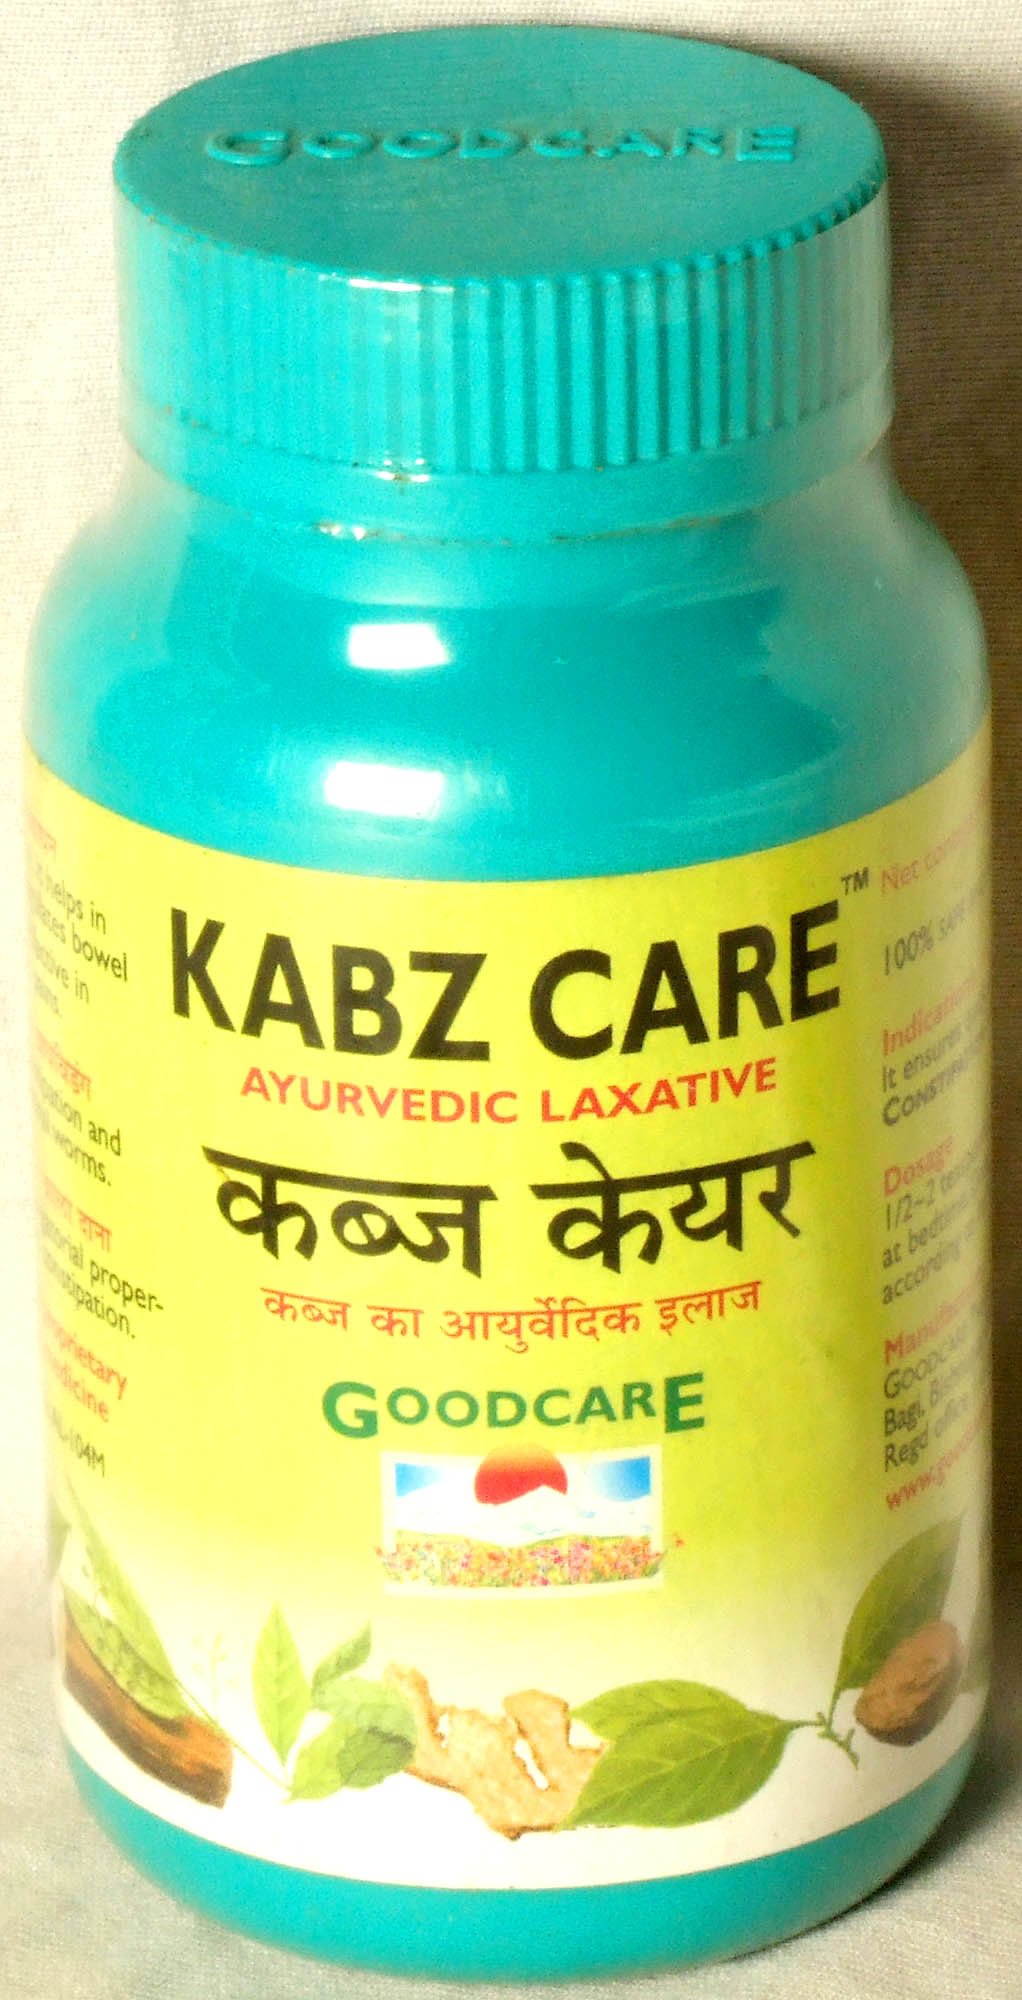 Kabz Care Ayurvedic Laxative - book cover